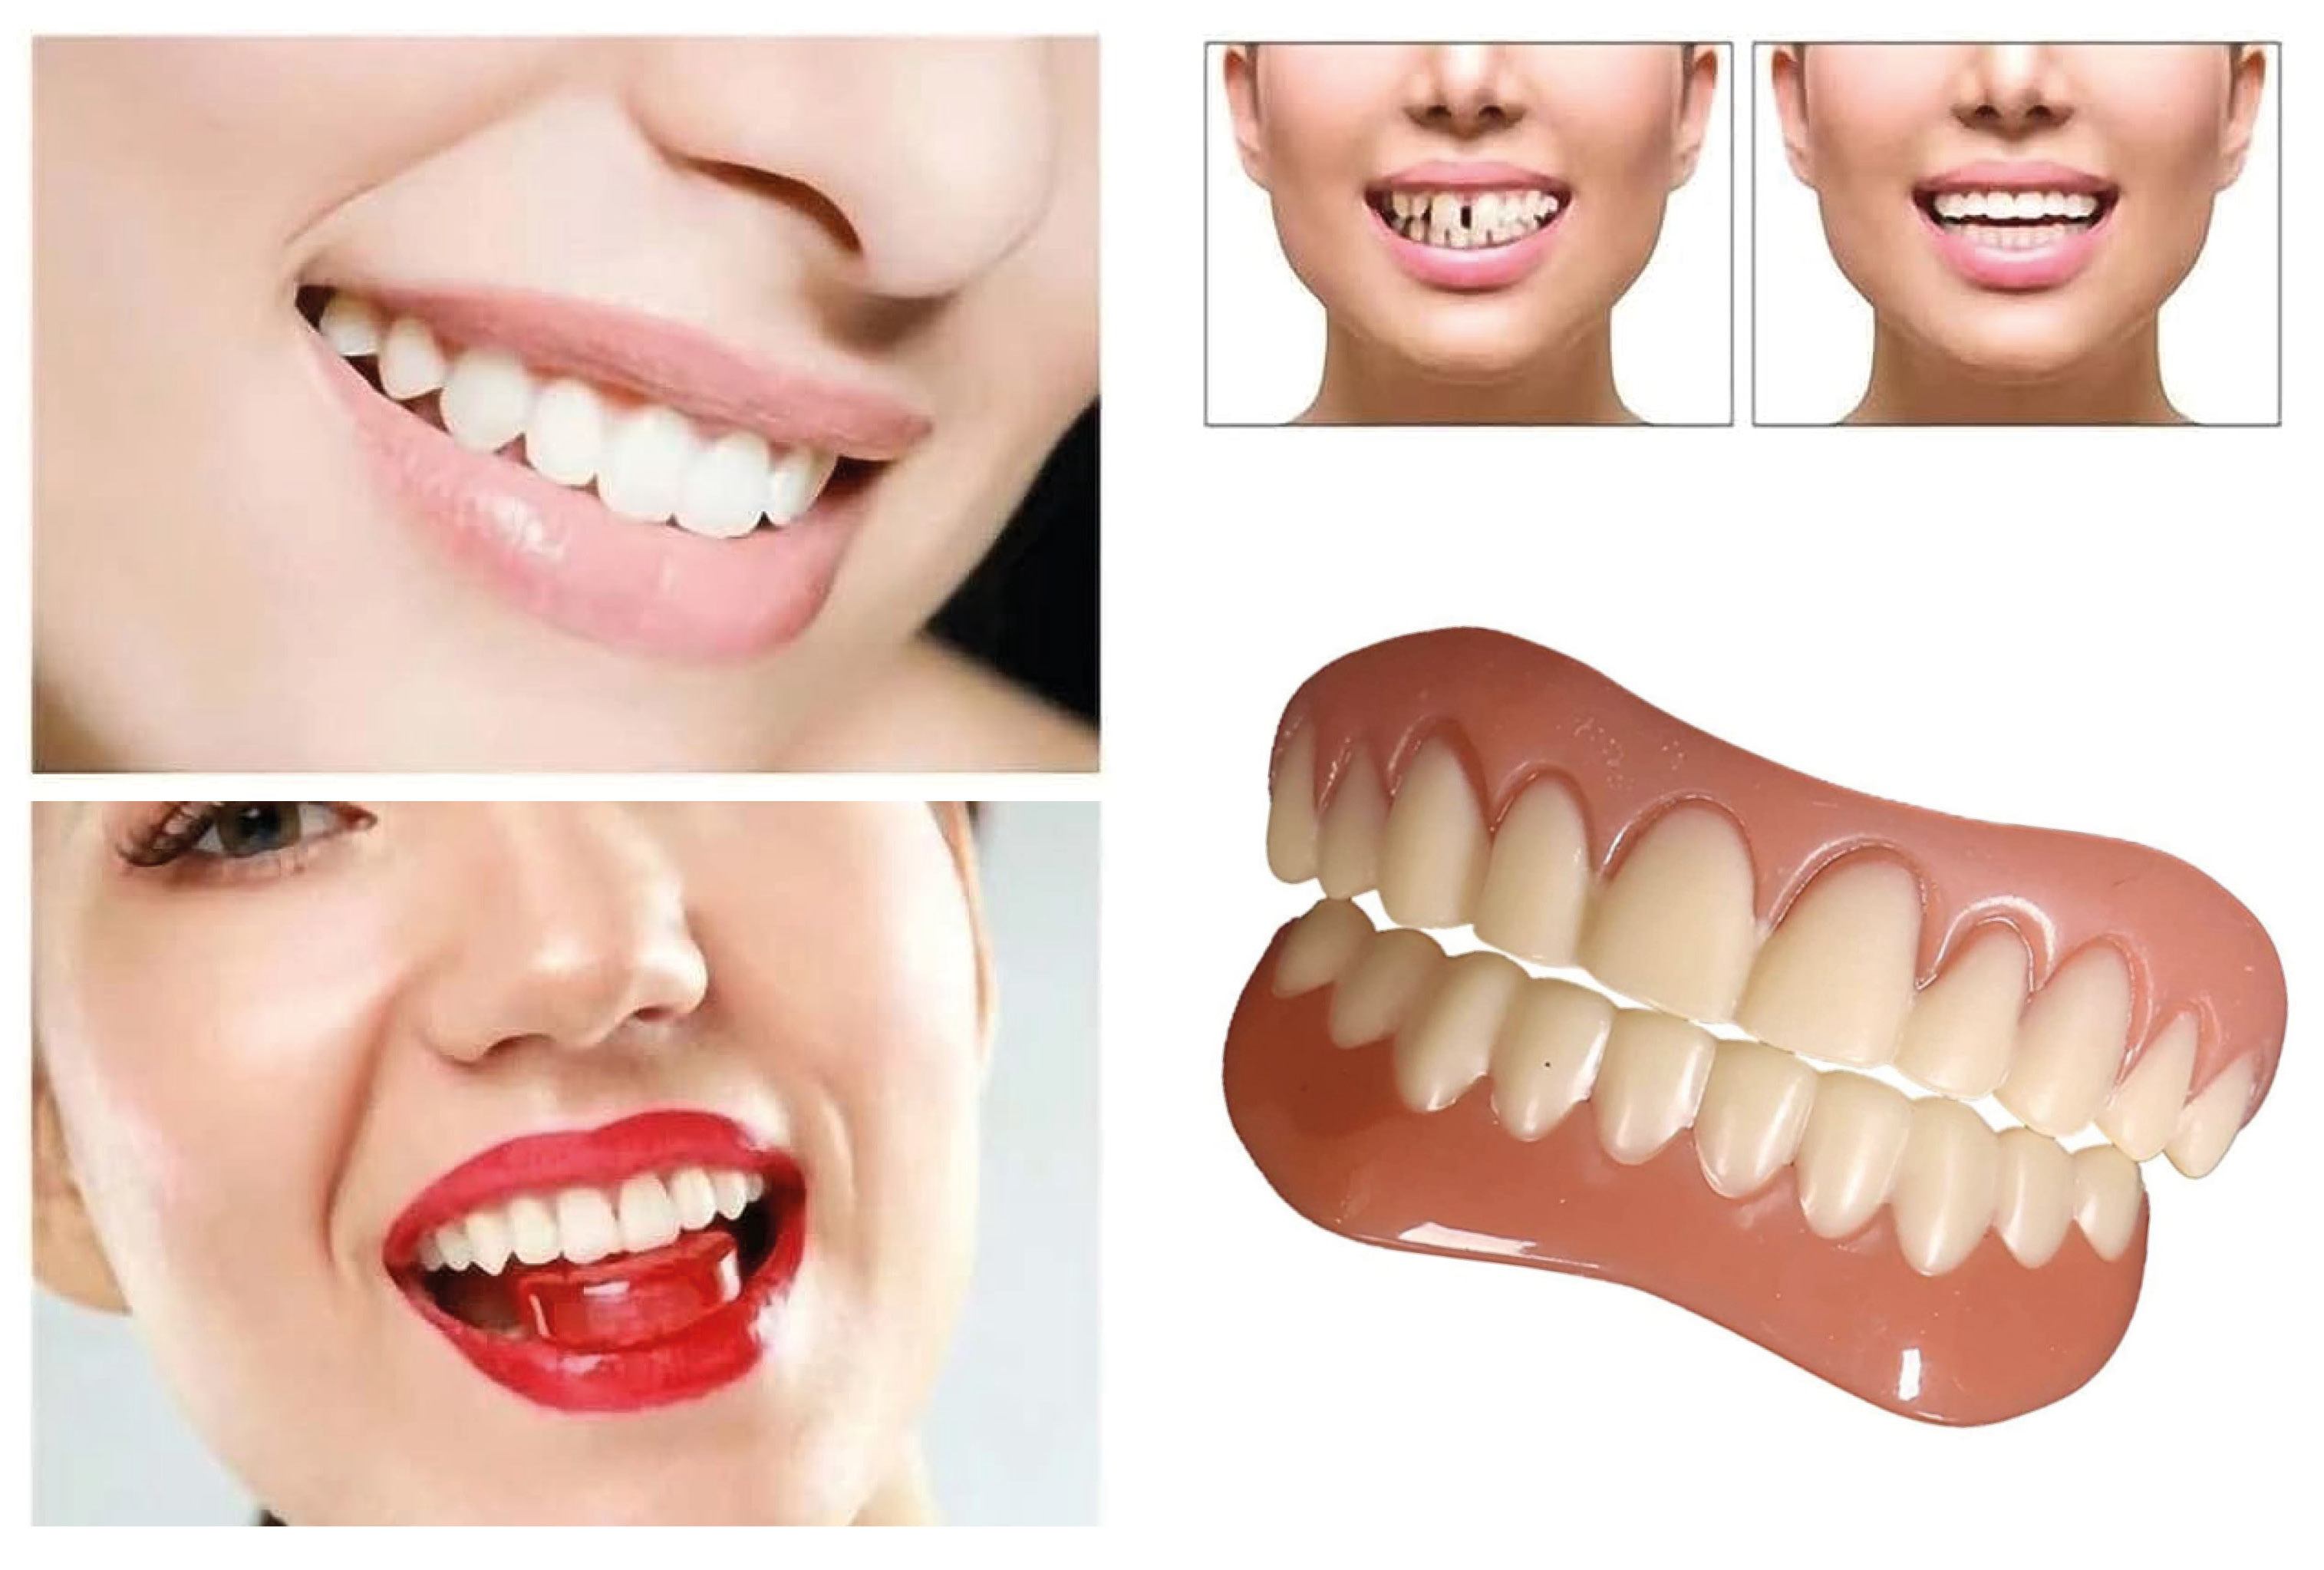 užitočná dočasná snímateľná zubná náhrada vrchná a spodná